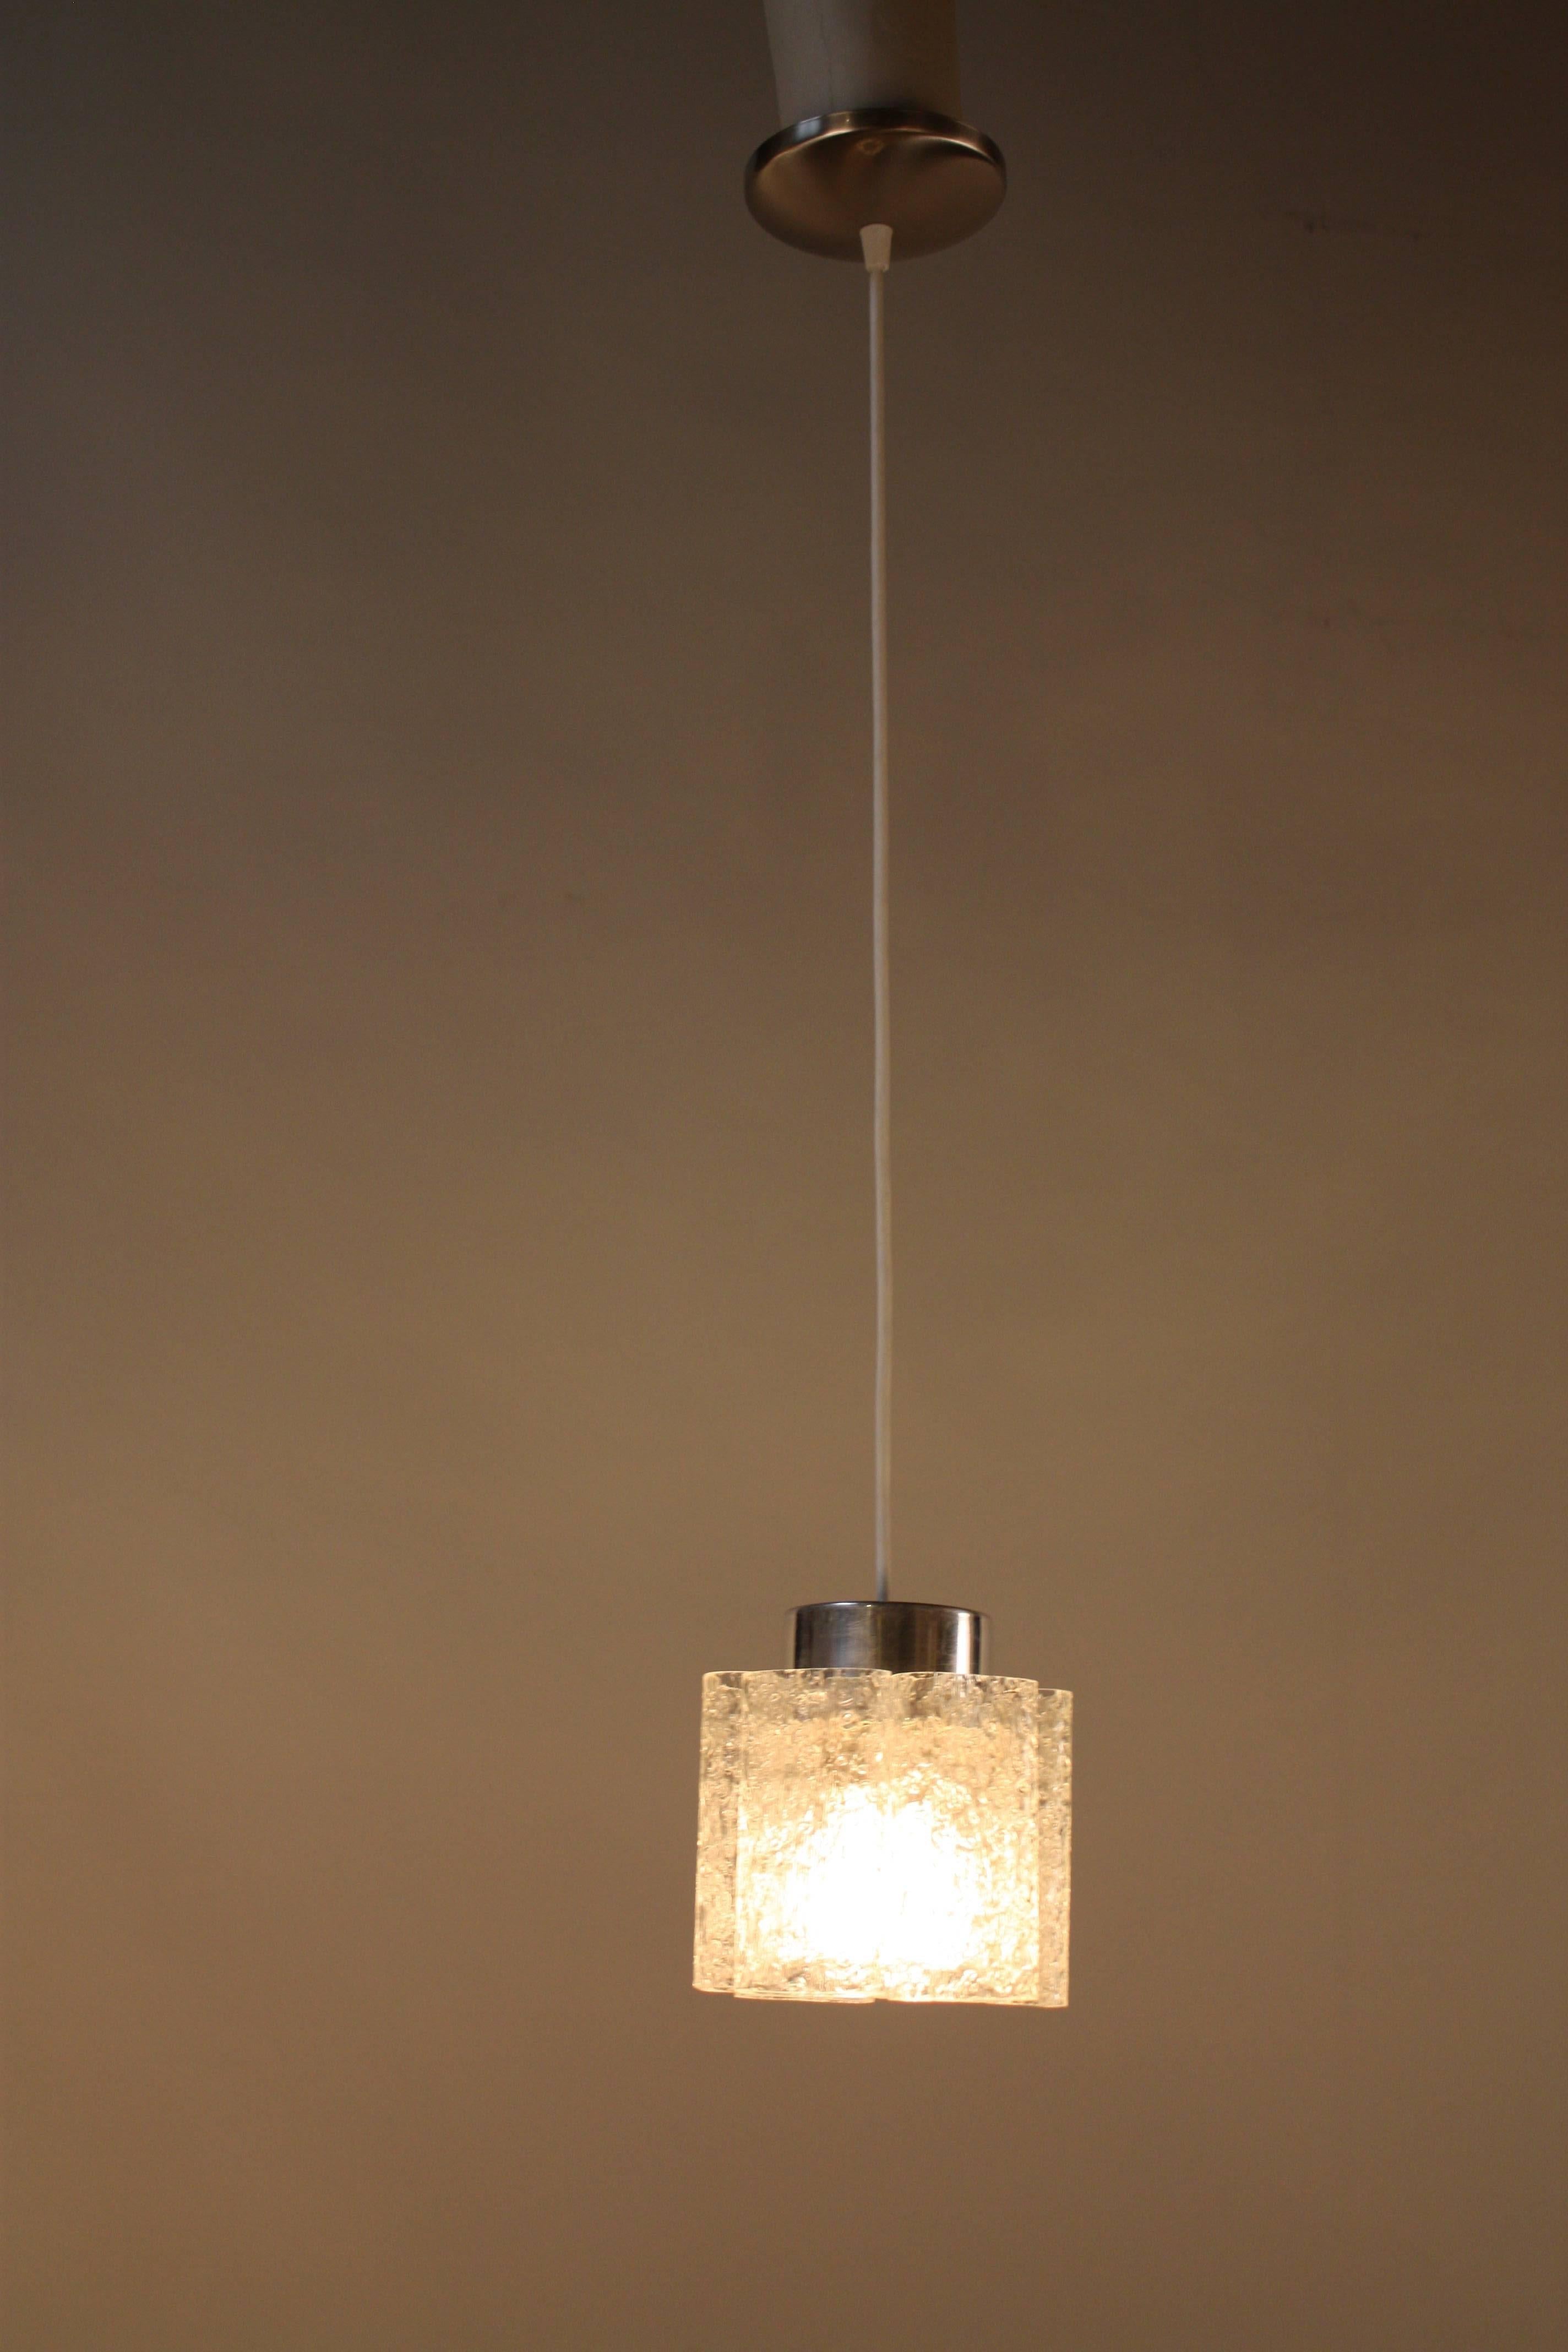 Set of three 1970s textured glass single light pendant lights by Doria of Germany.